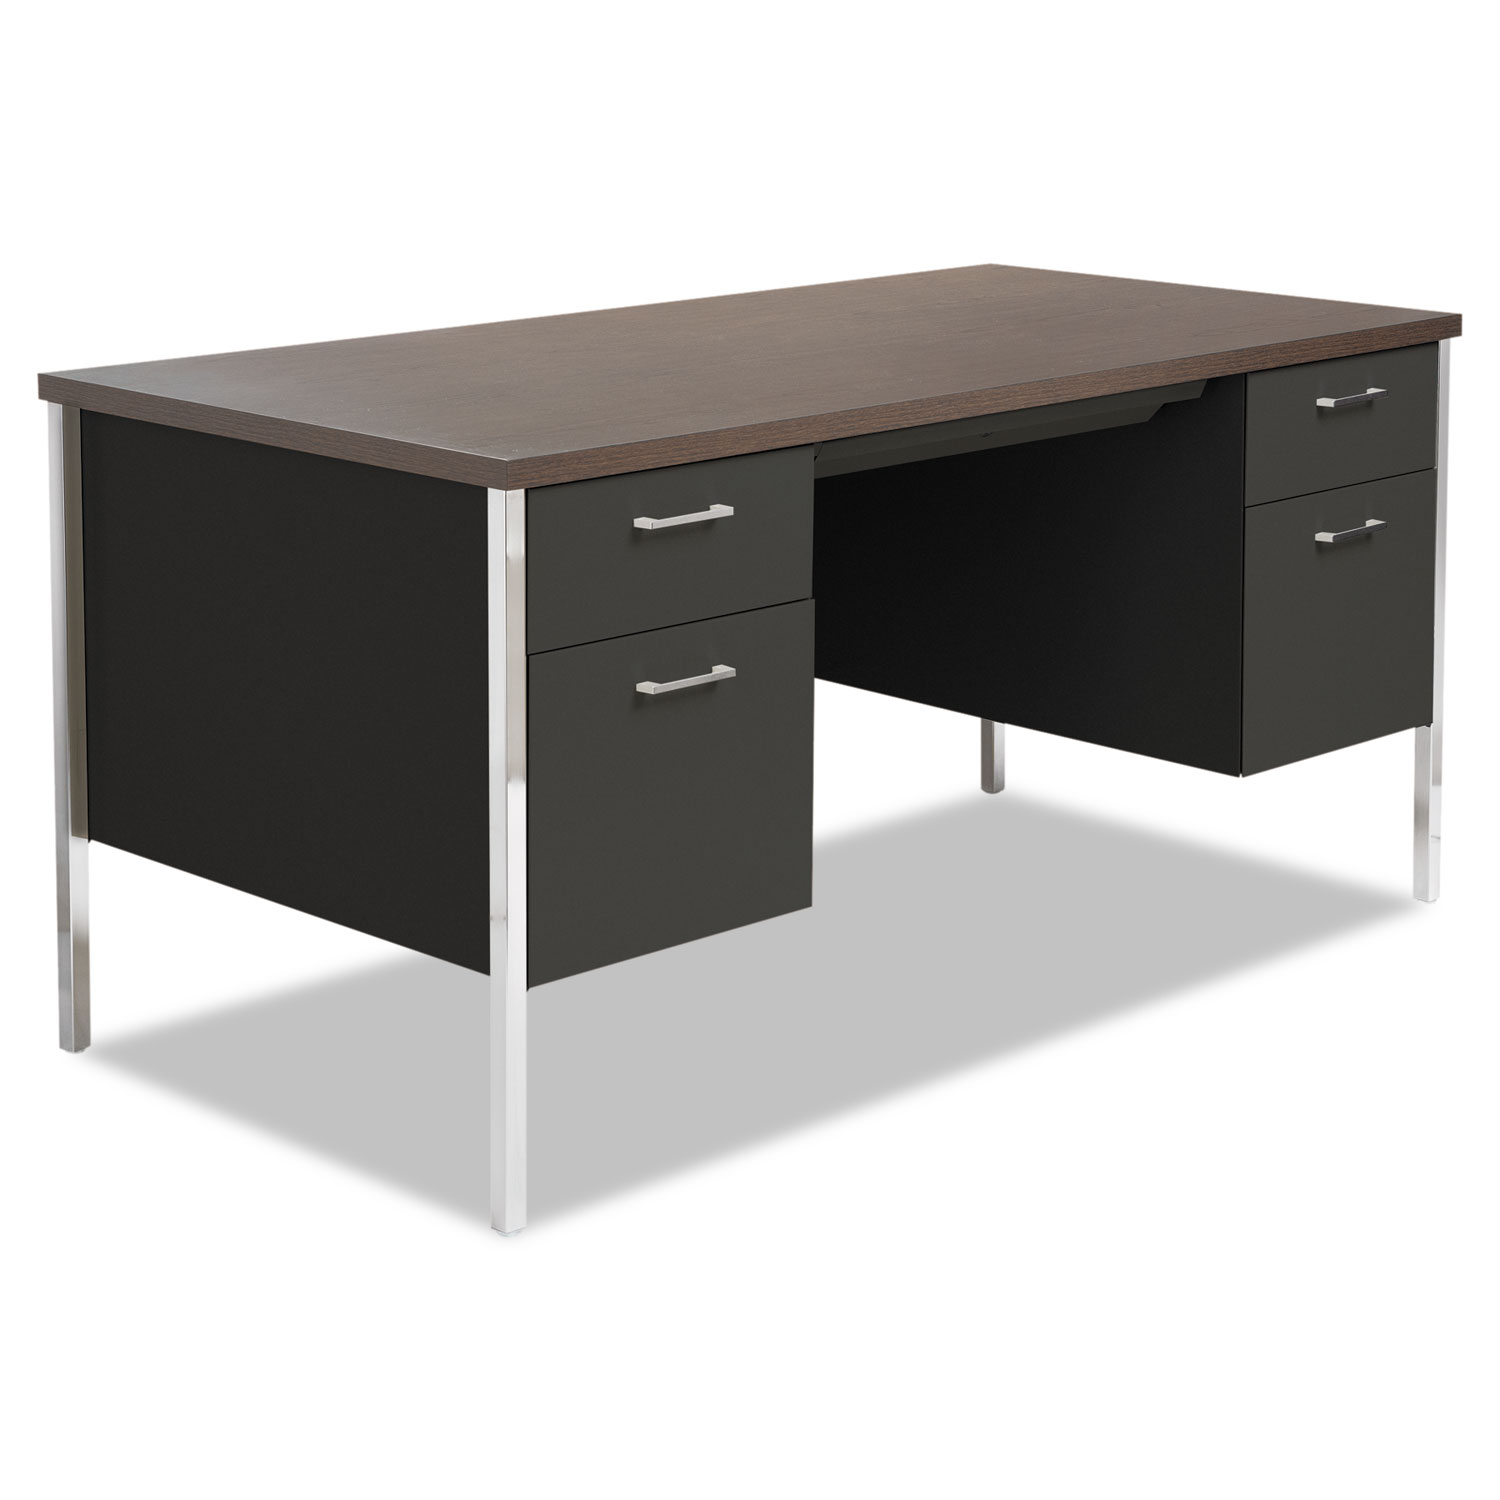  Alera ALESD6030BM Double Pedestal Steel Desk, Metal Desk, 60w x 30d x 29.5h, Mocha/Black (ALESD6030BM) 